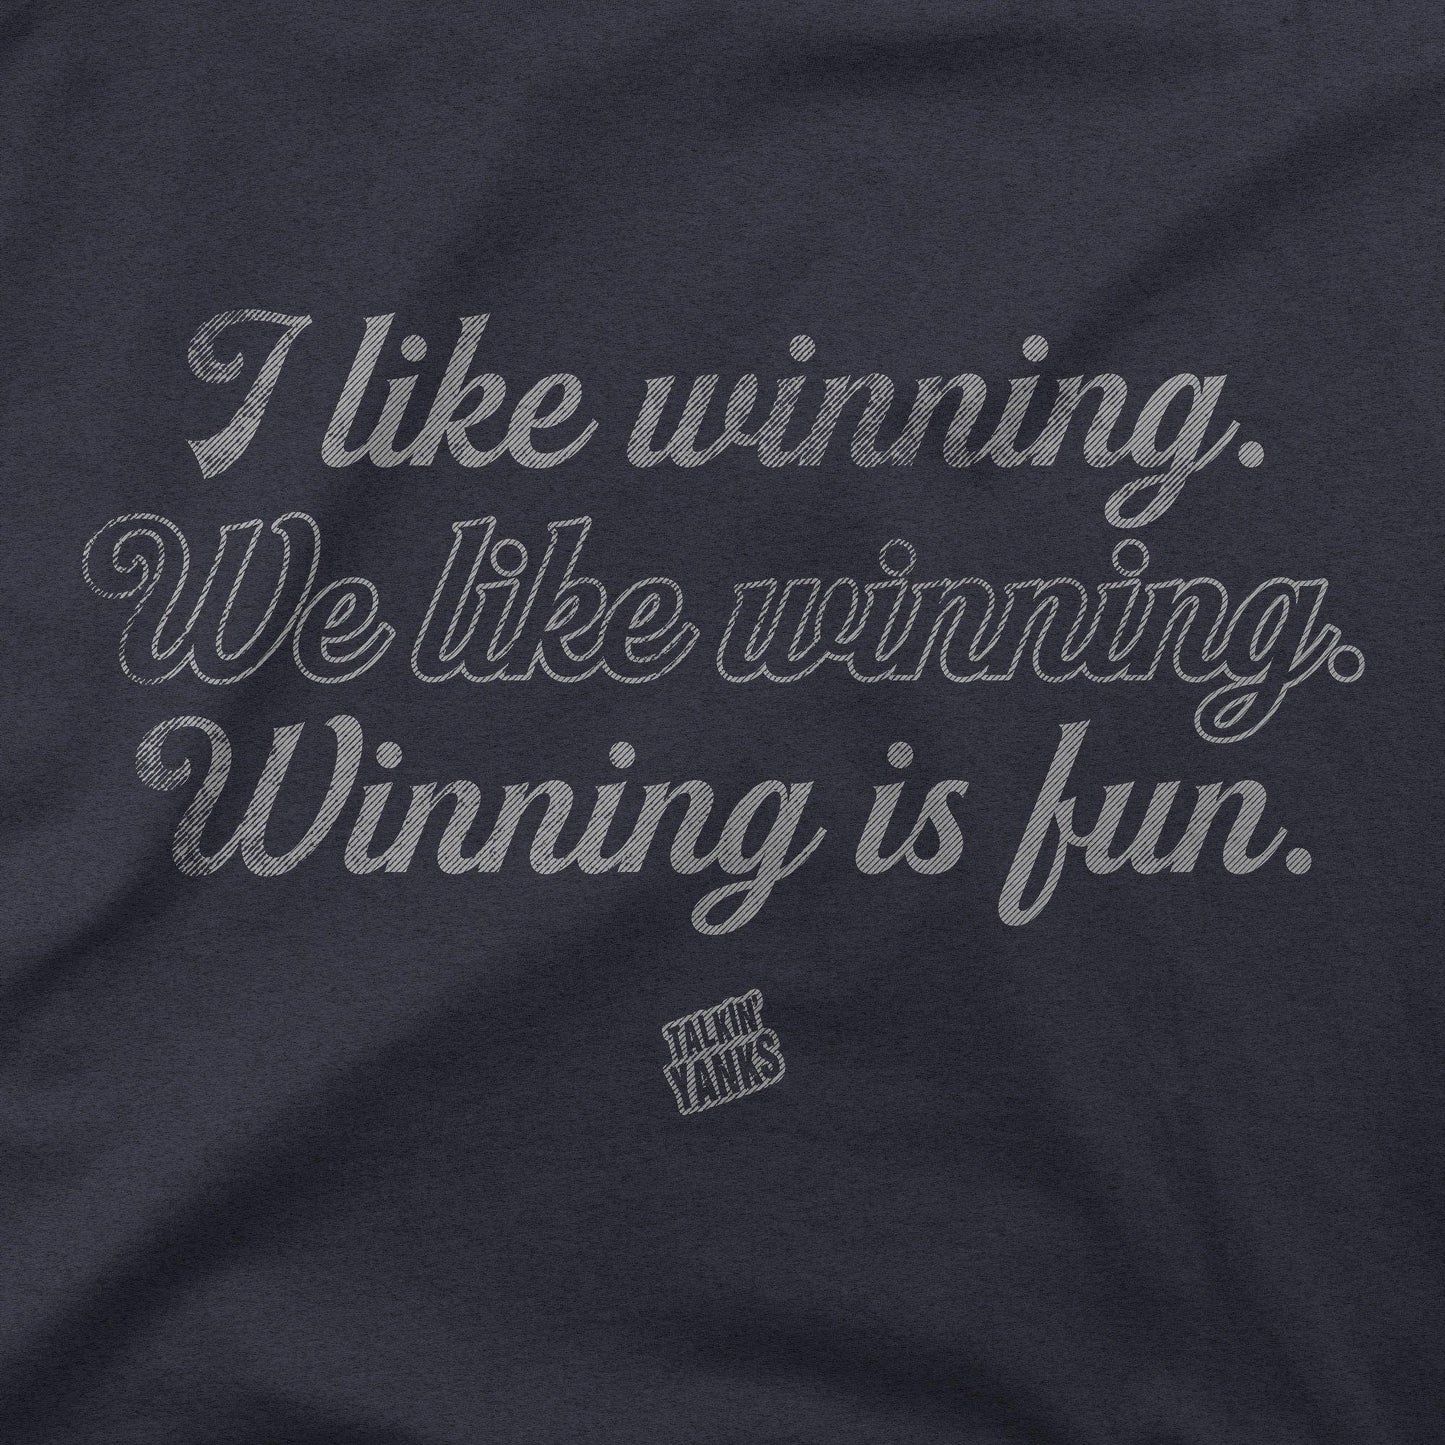 I Like Winning. | T-Shirt - Jomboy Media